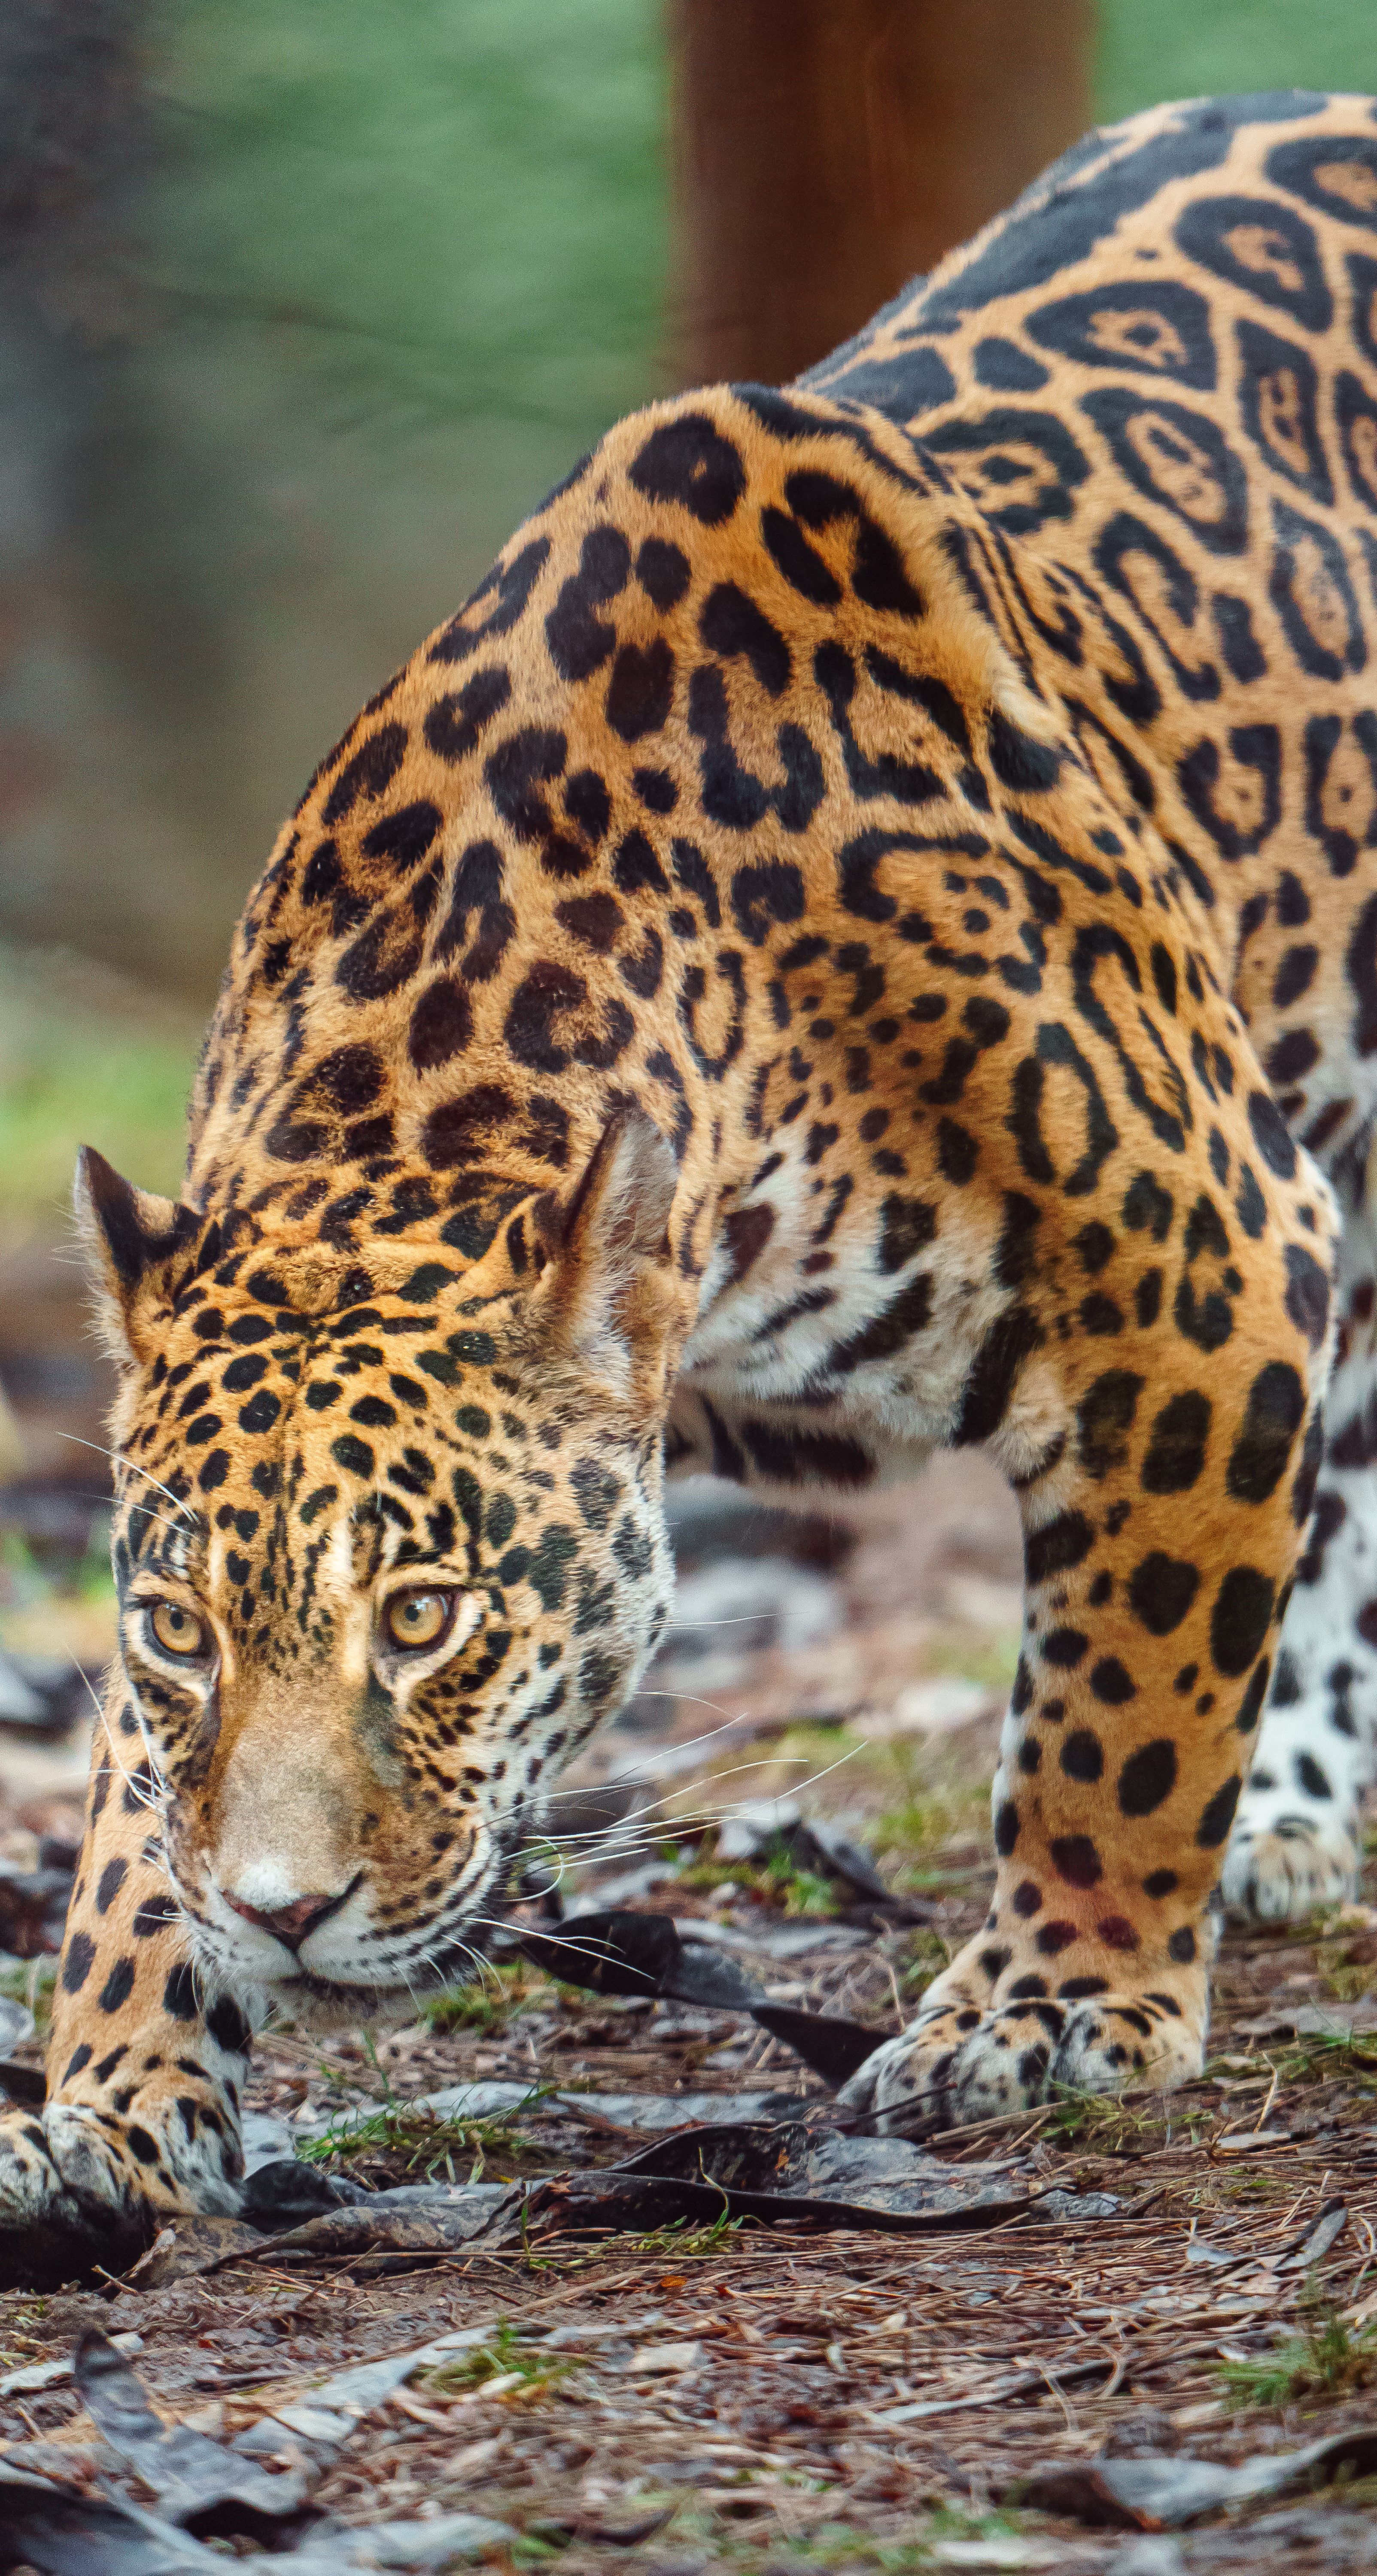 Jaguar on the prowl.